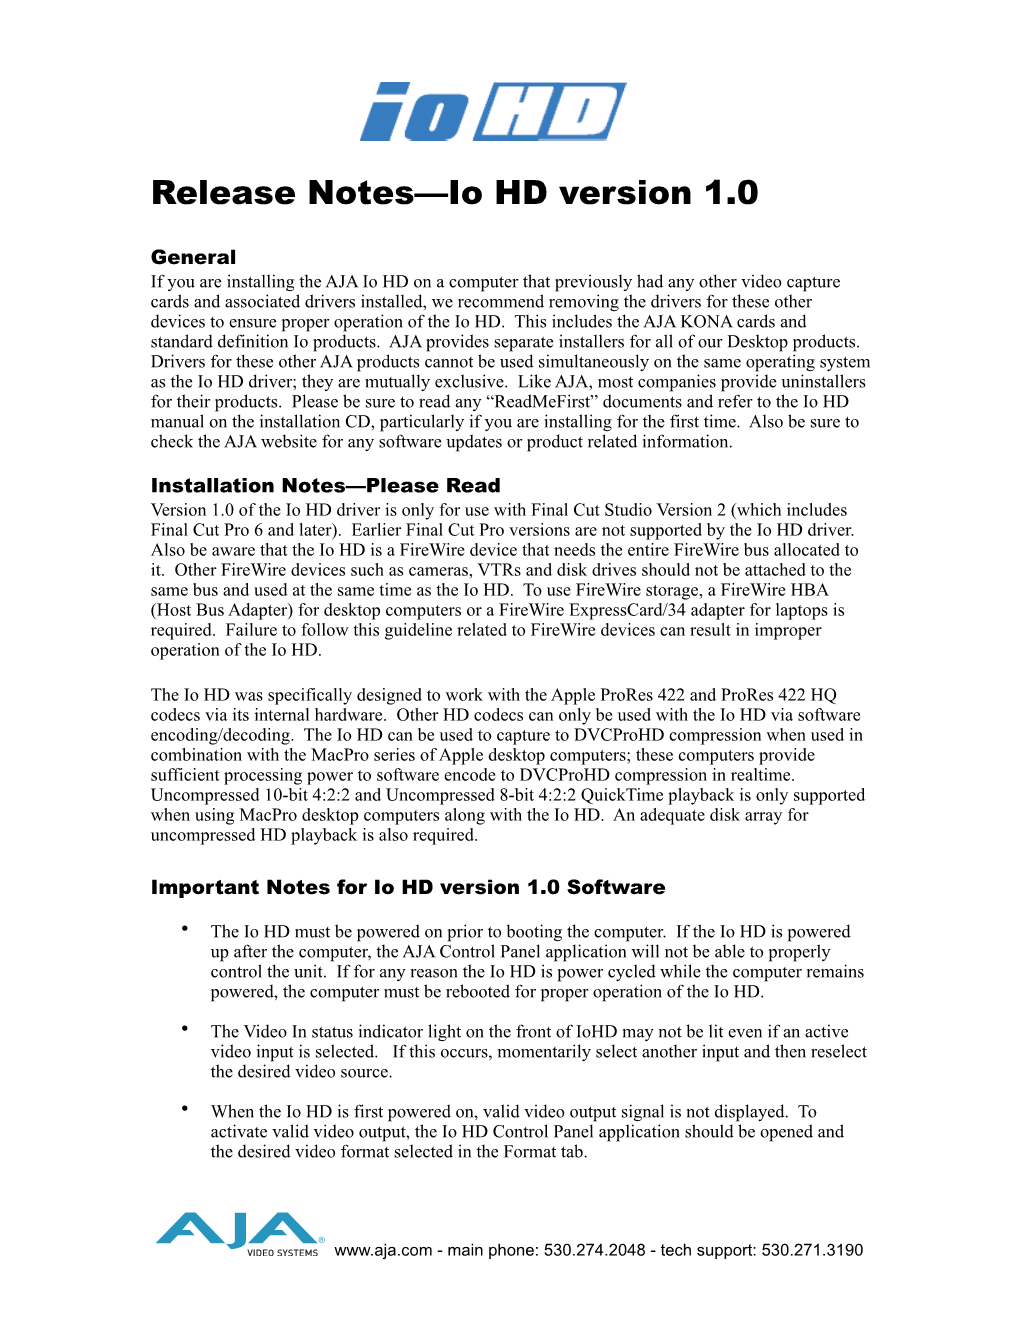 Release Notes—Io HD Version 1.0